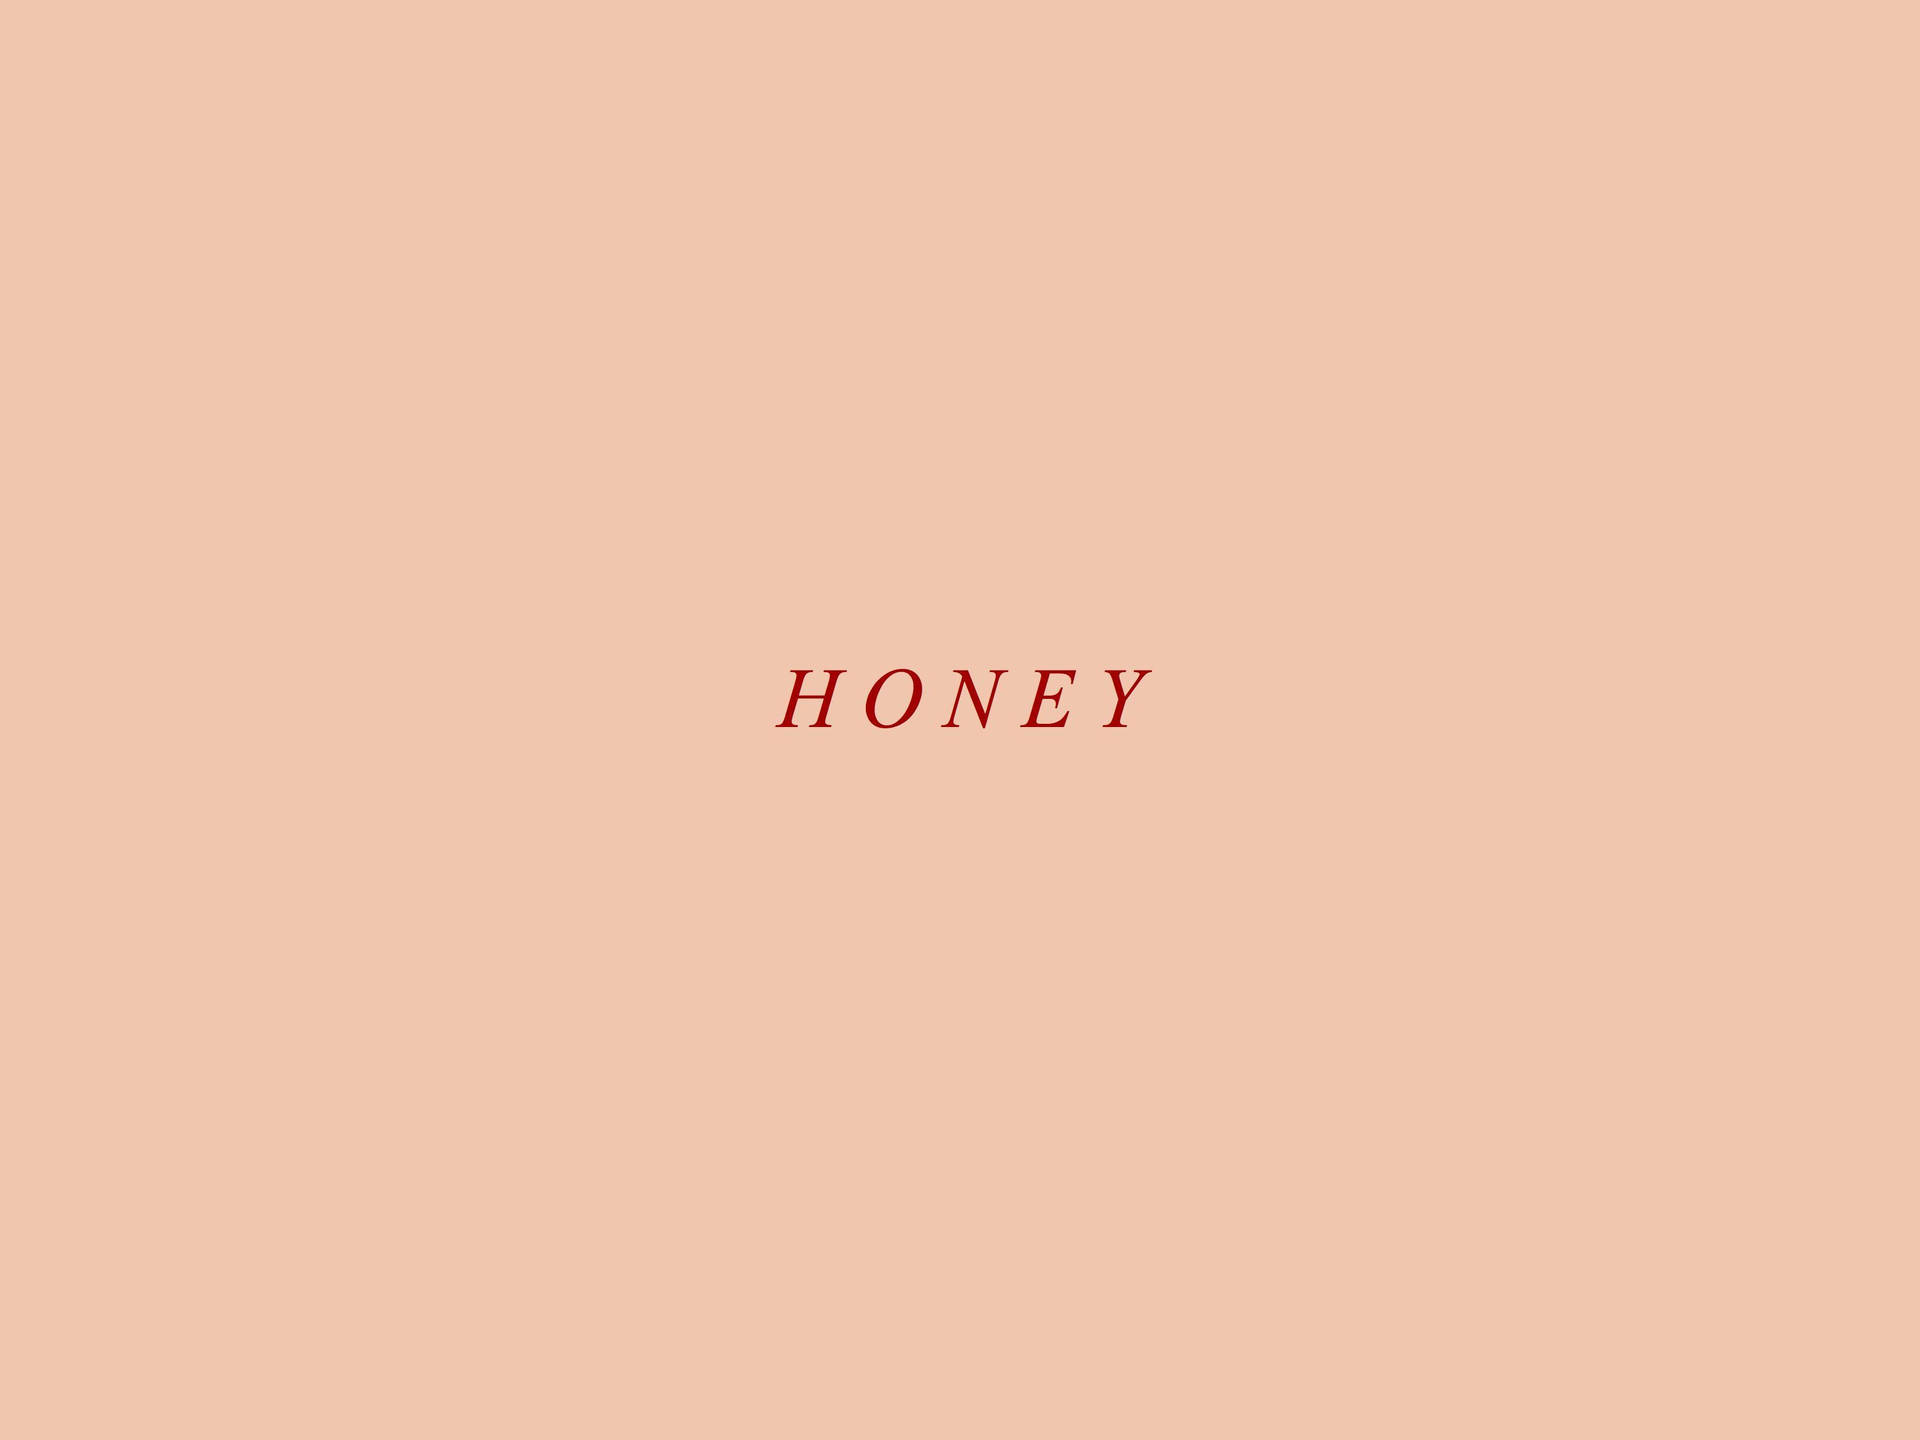 Aesthetic Beige Honey Background